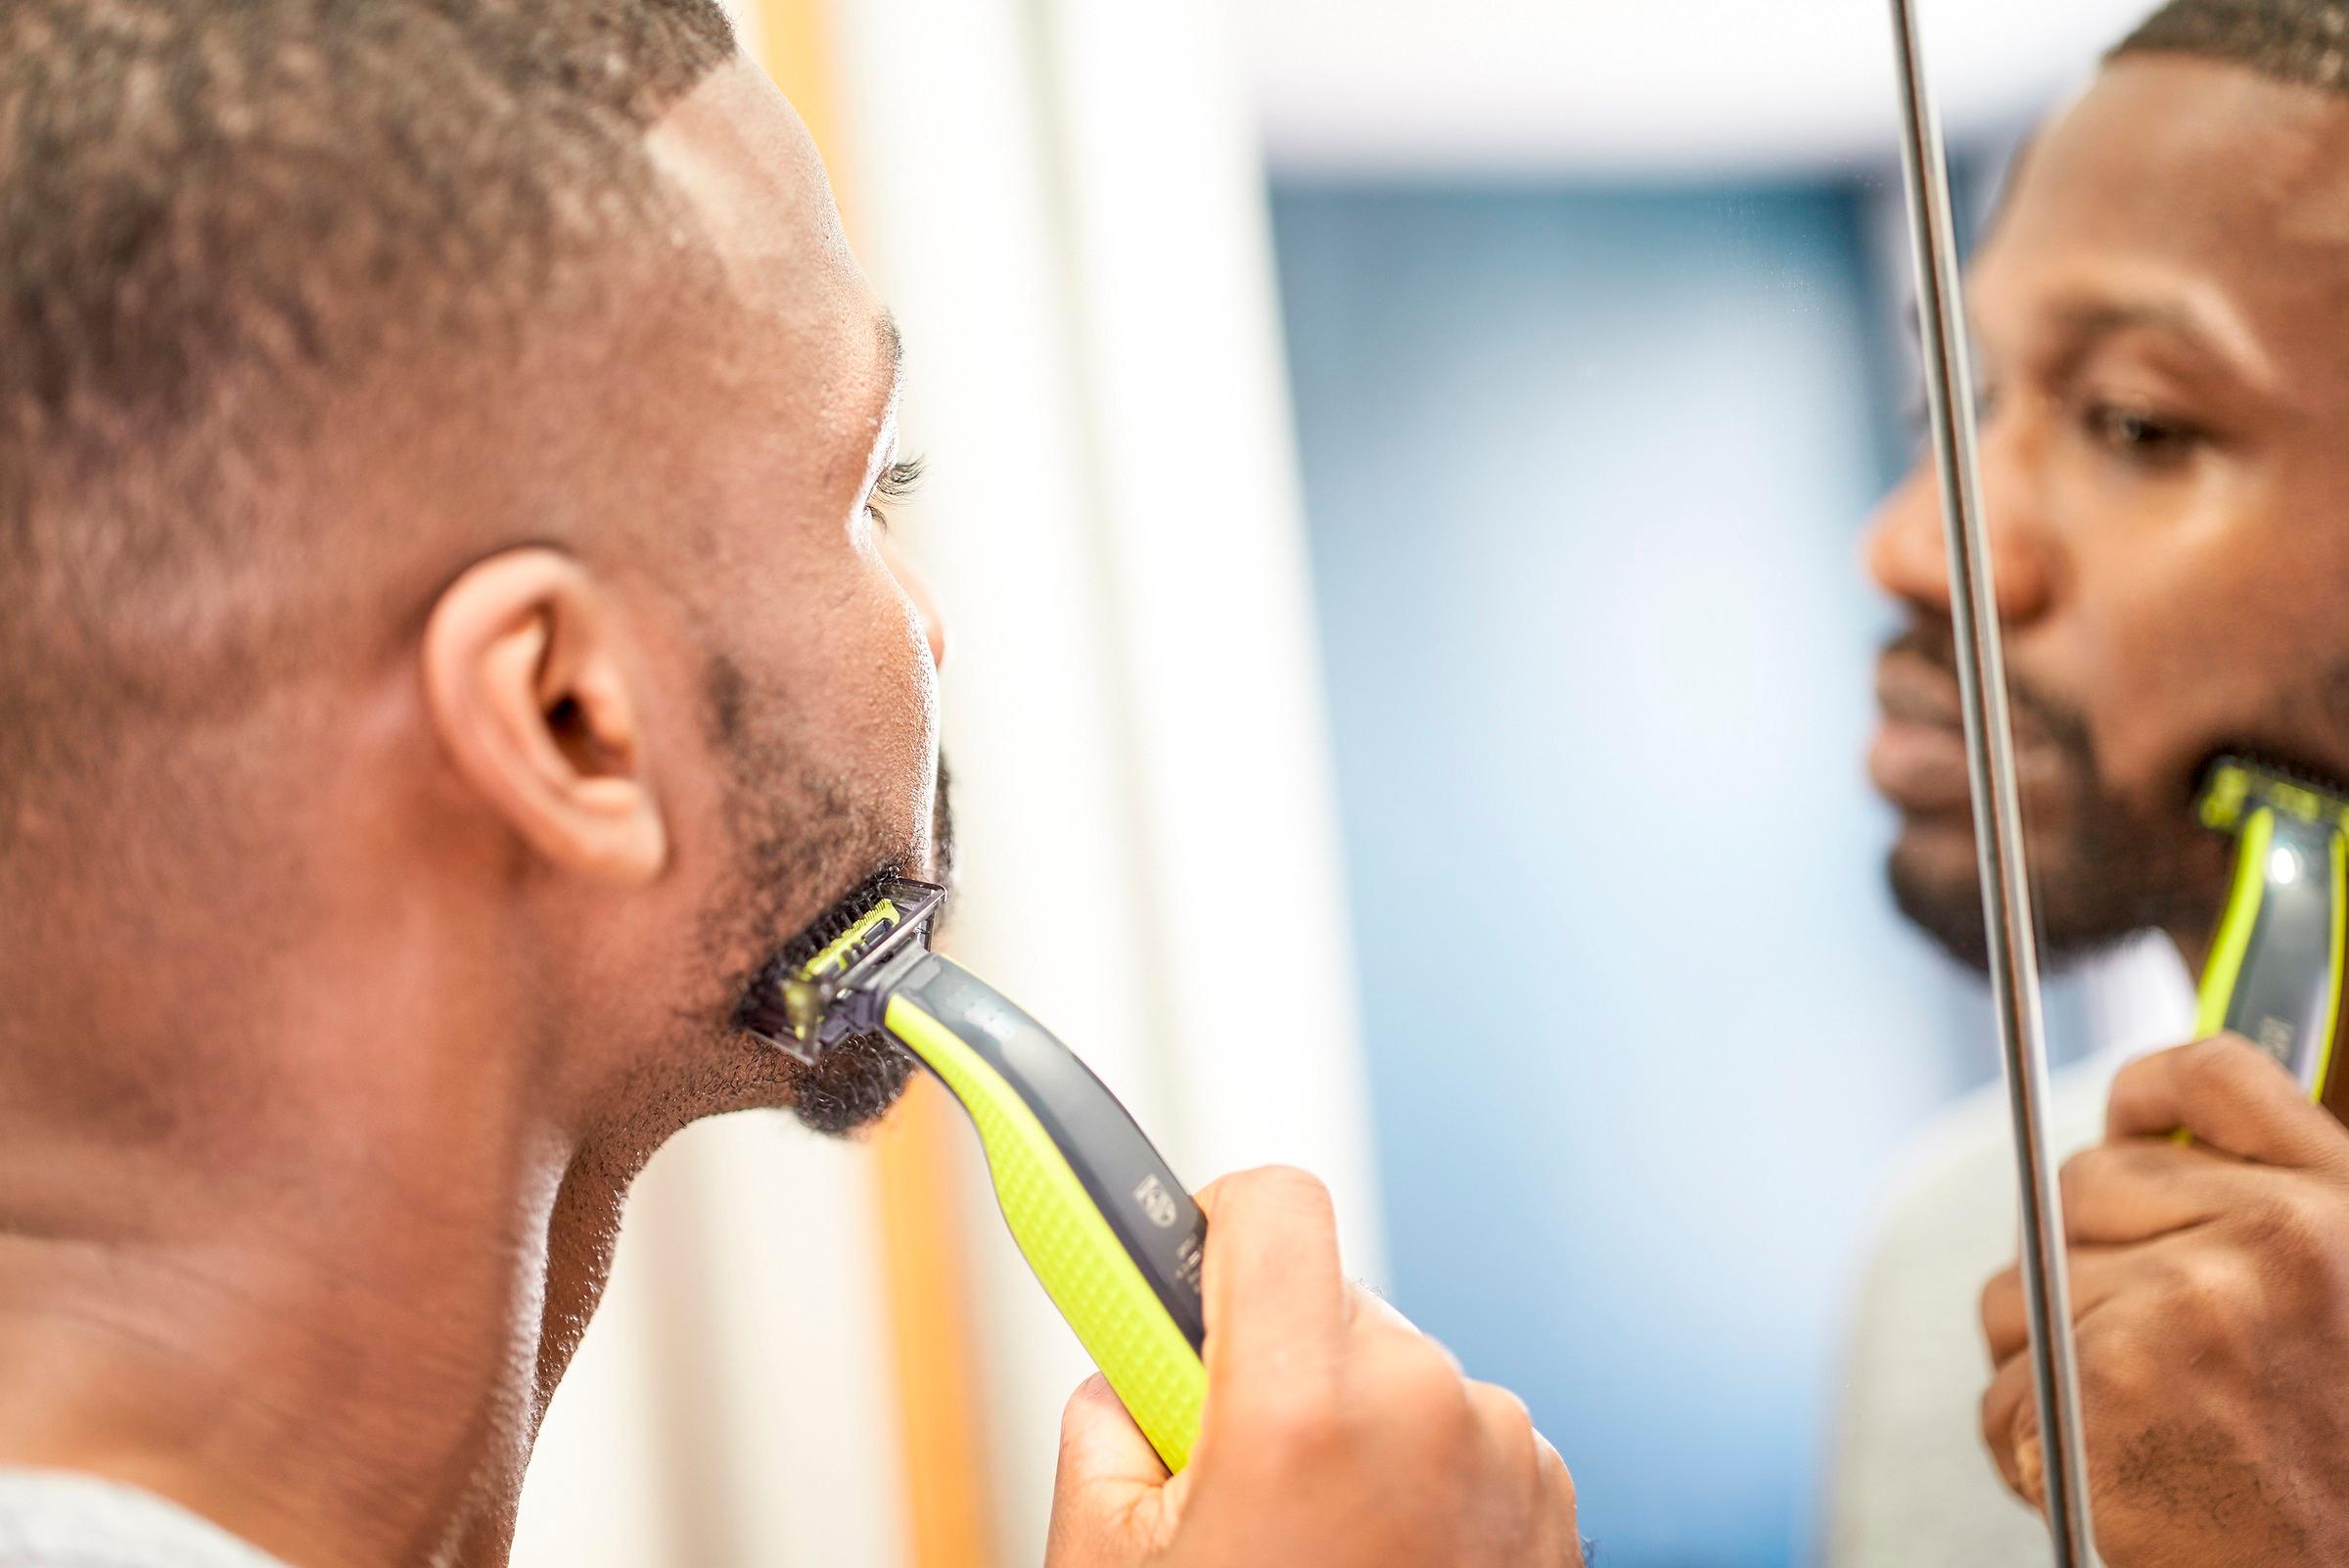 philips norelco oneblade beard trimmer